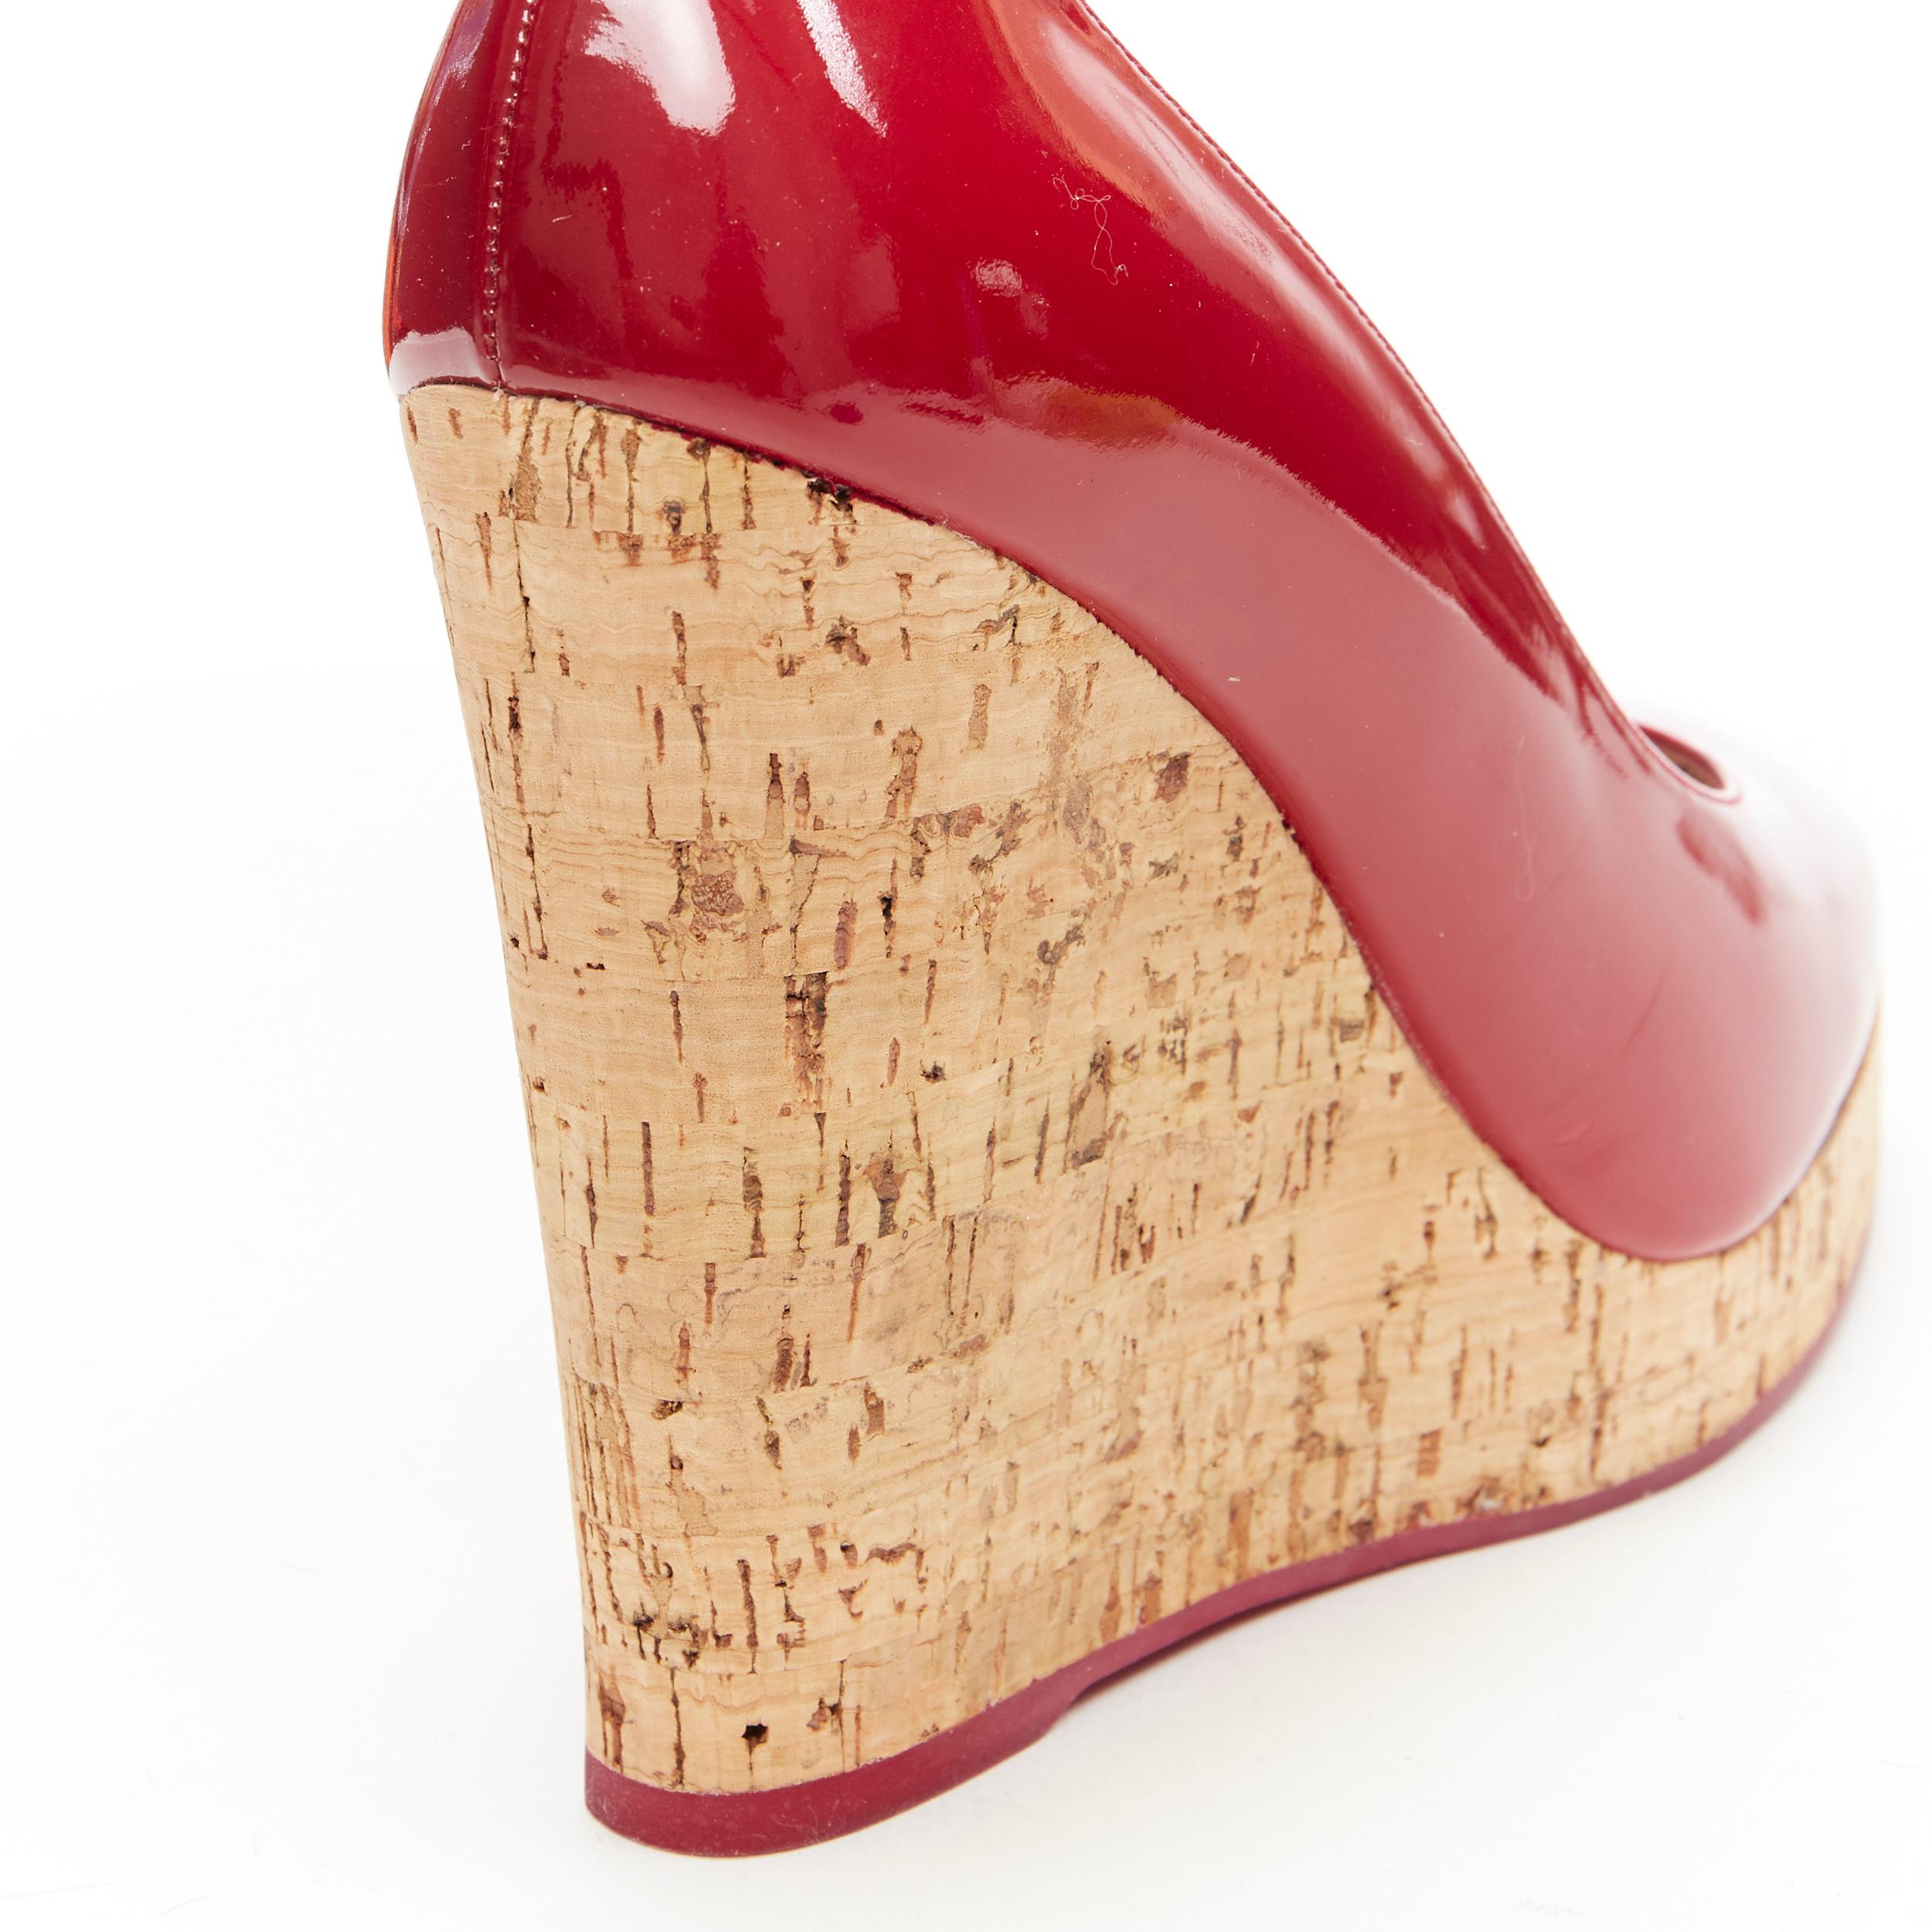 YVES SAINT LAURENT YSL red patent leather round toe cork wedge platform EU39 4